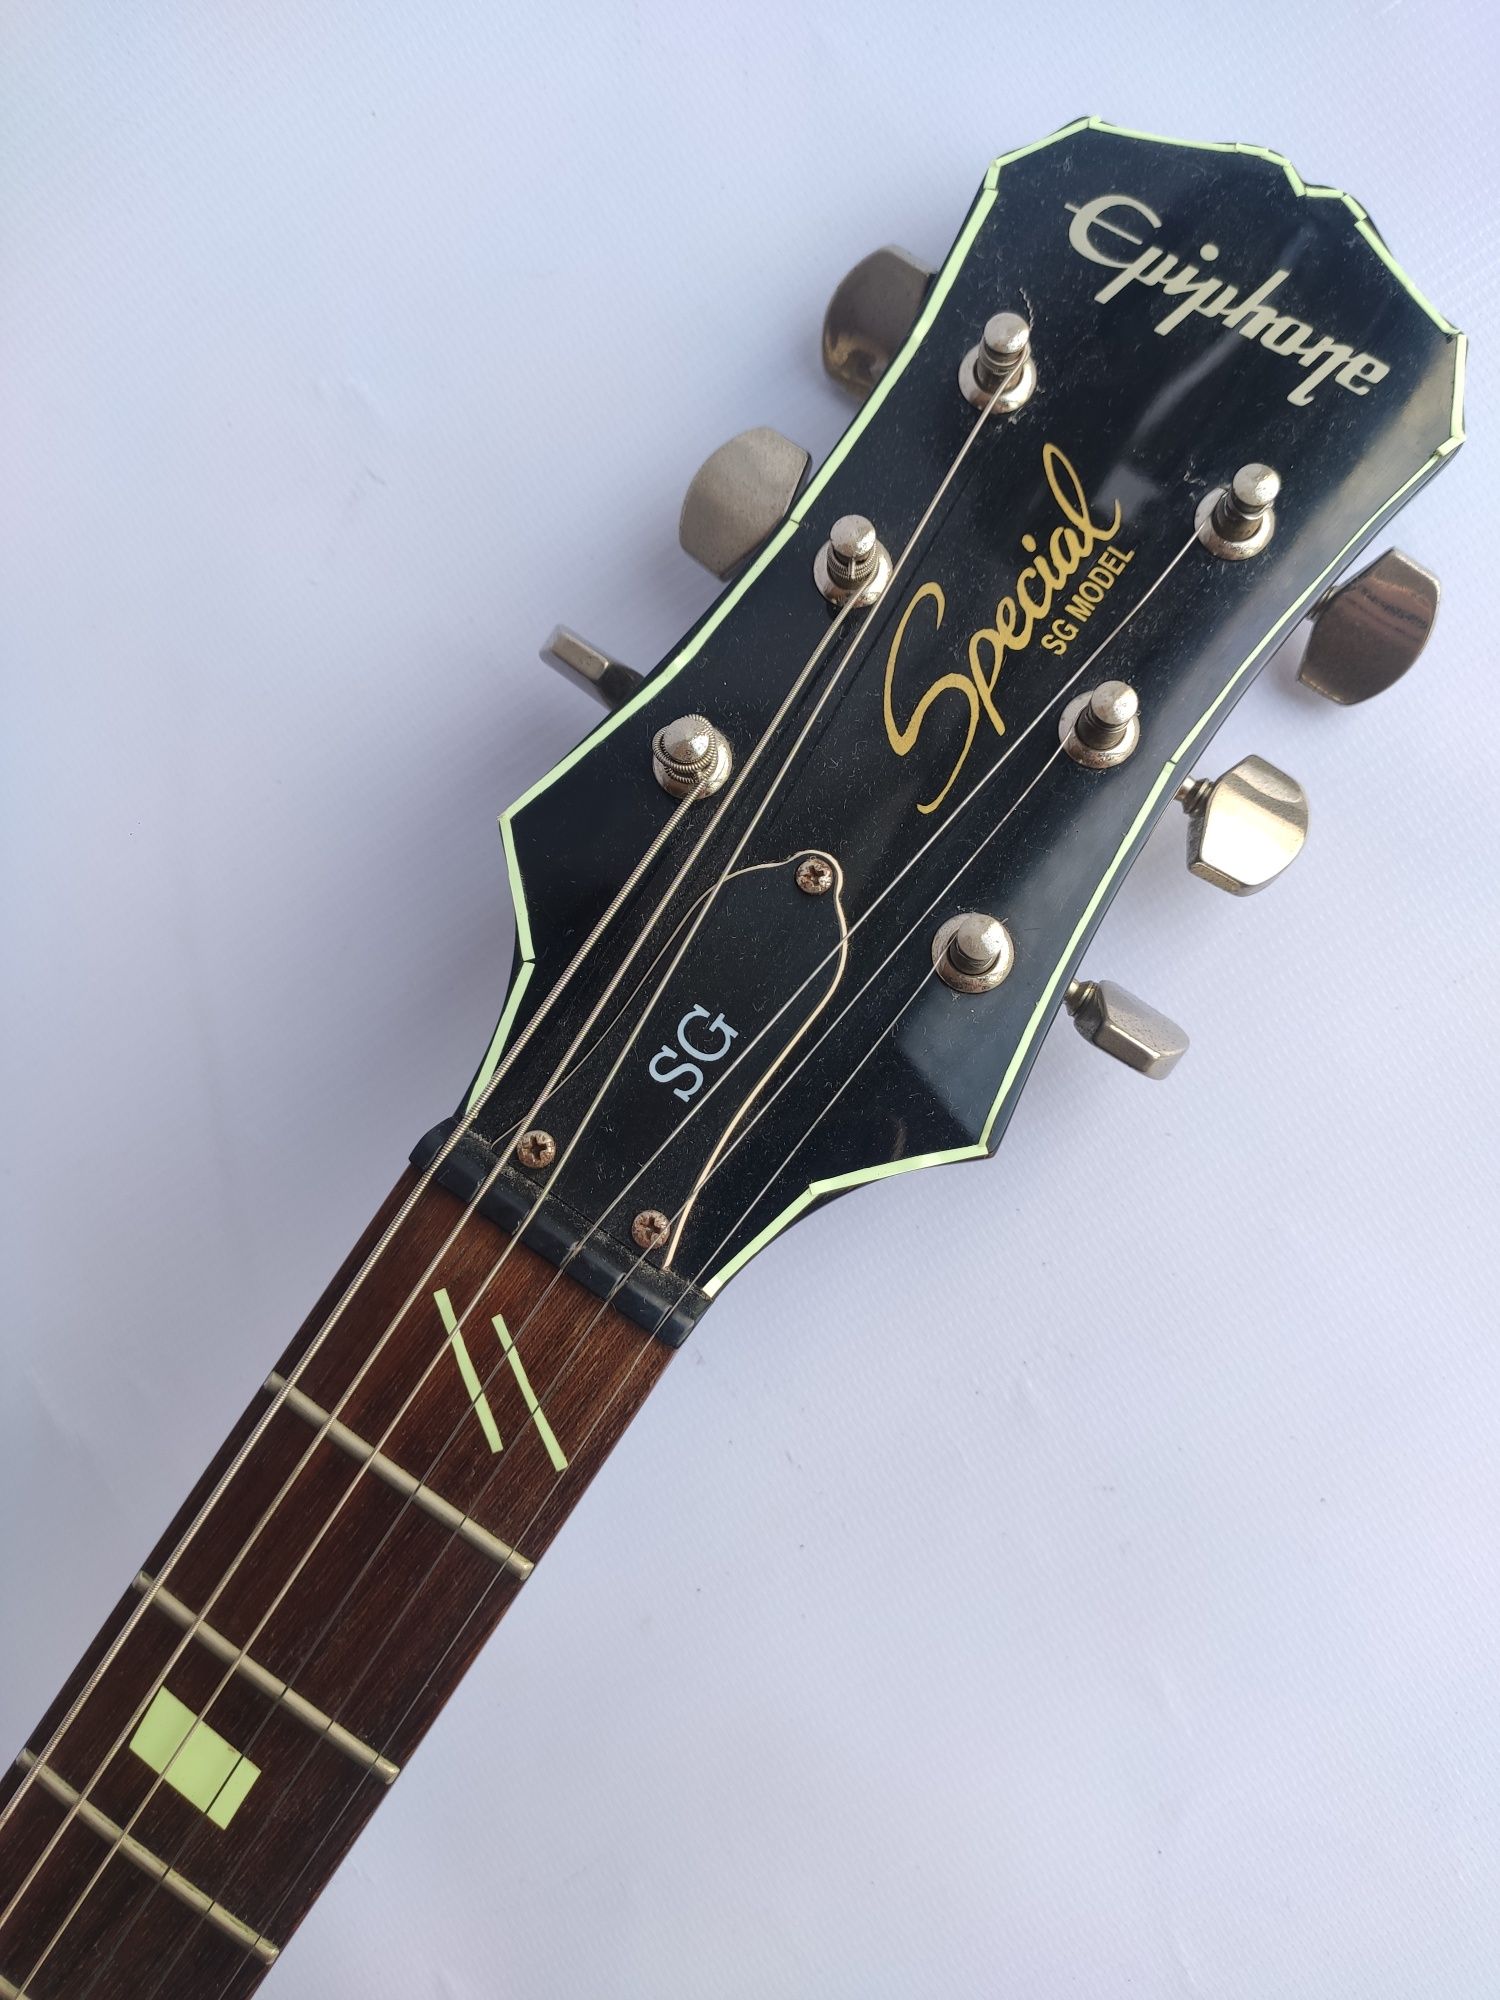 Epiphone SG Special guitarra elétrica.